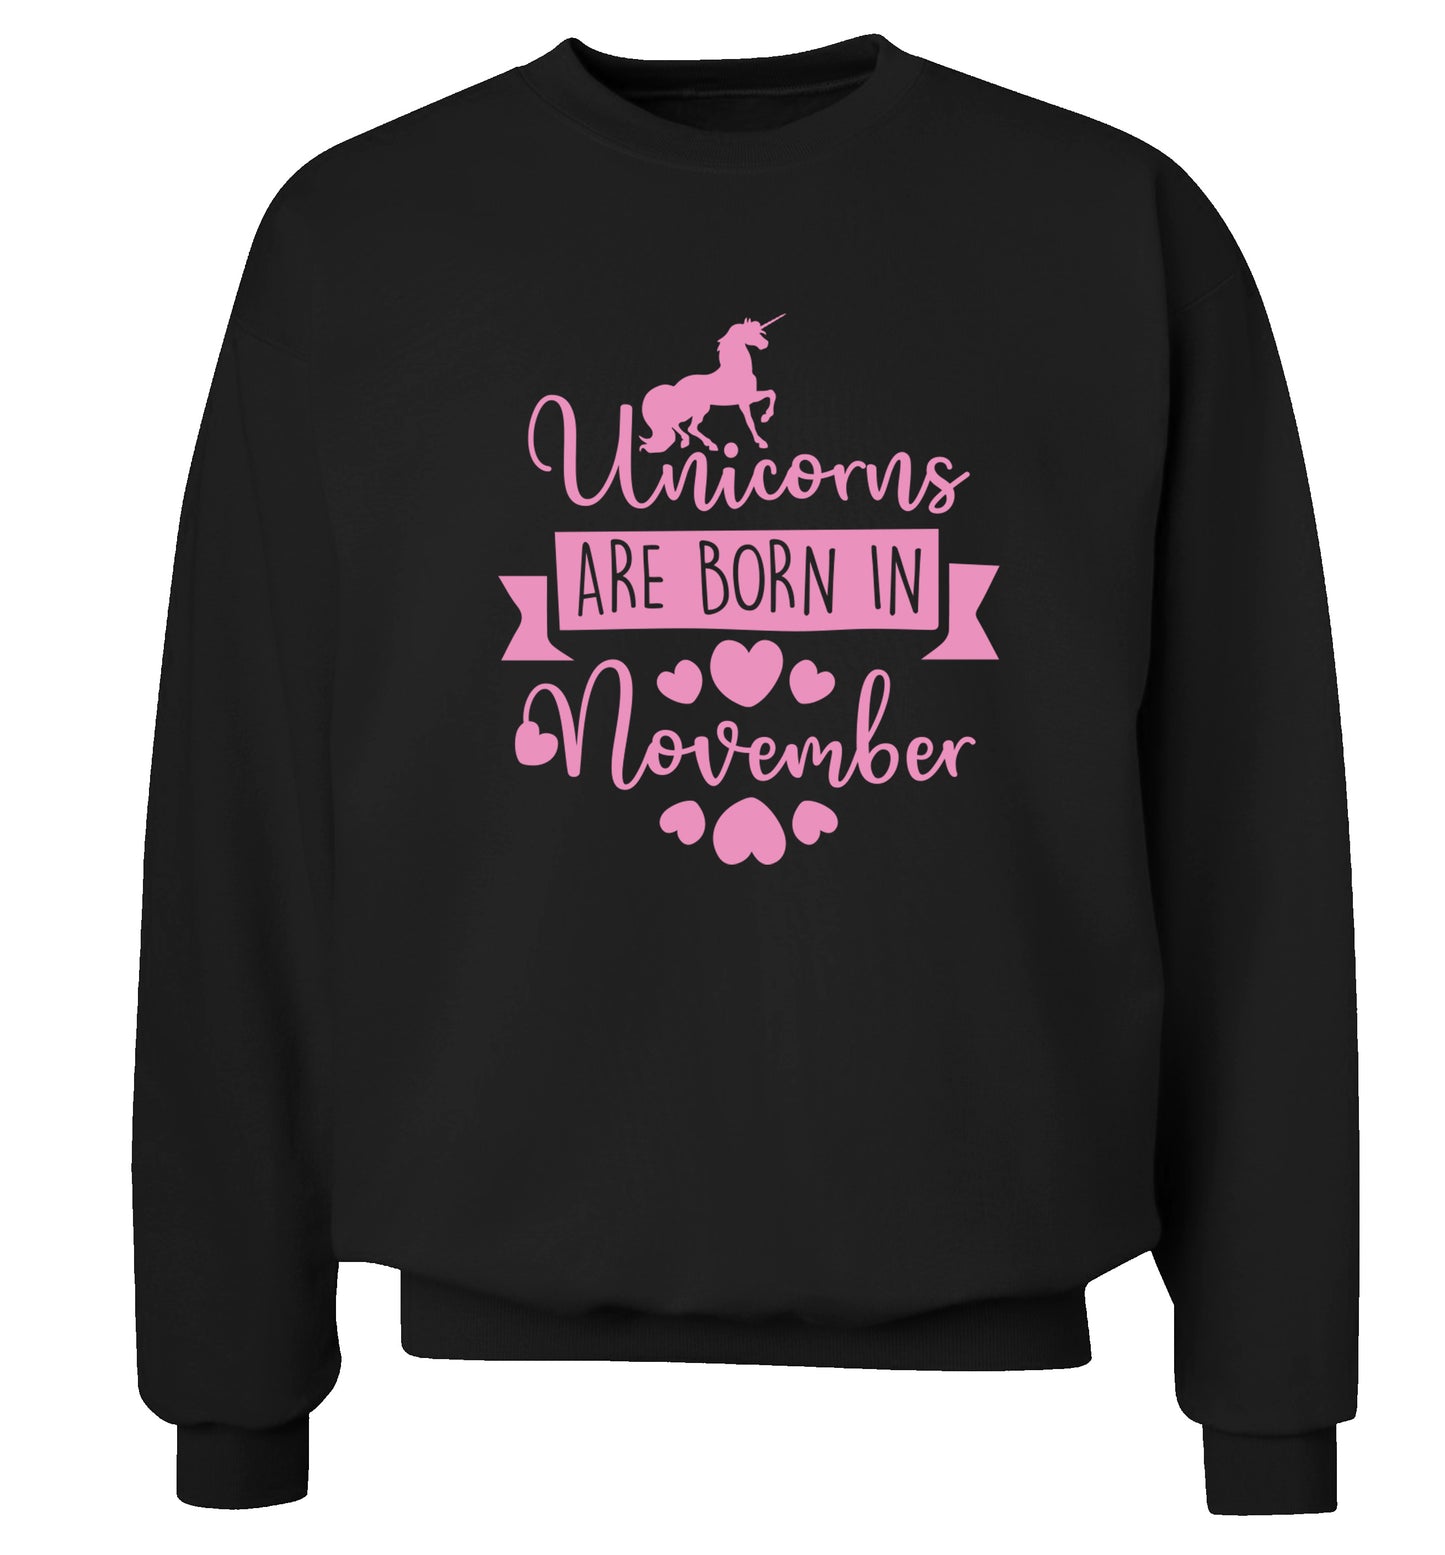 Unicorns are born in November Adult's unisex black Sweater 2XL